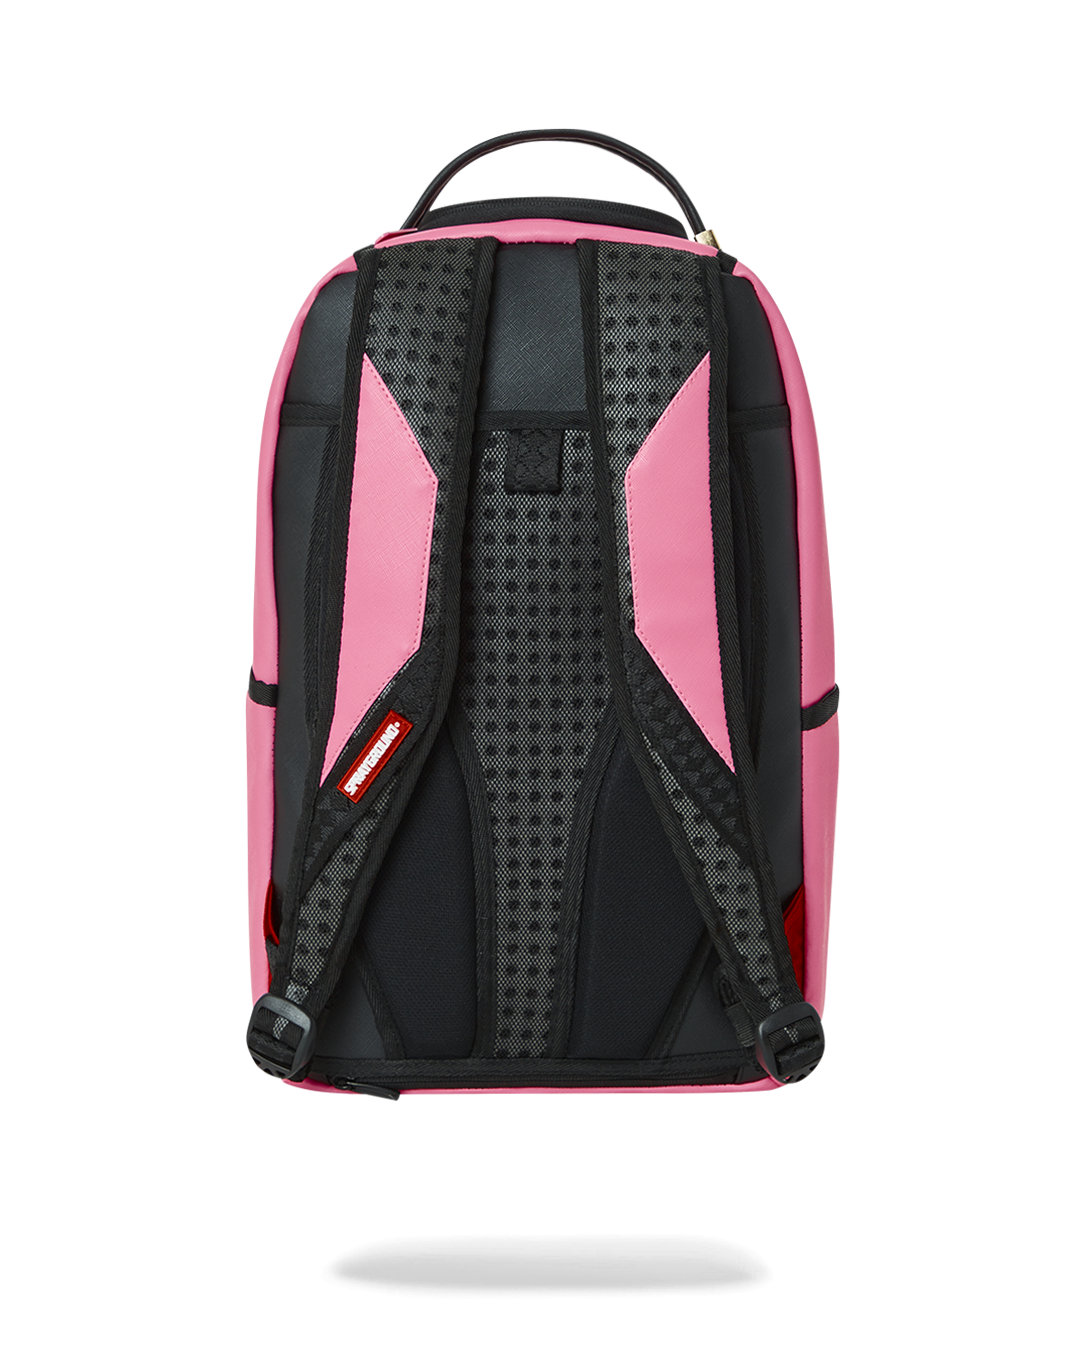 Sprayground Backpack Sakura Shockwave Pink DLX Shark Books Laptop